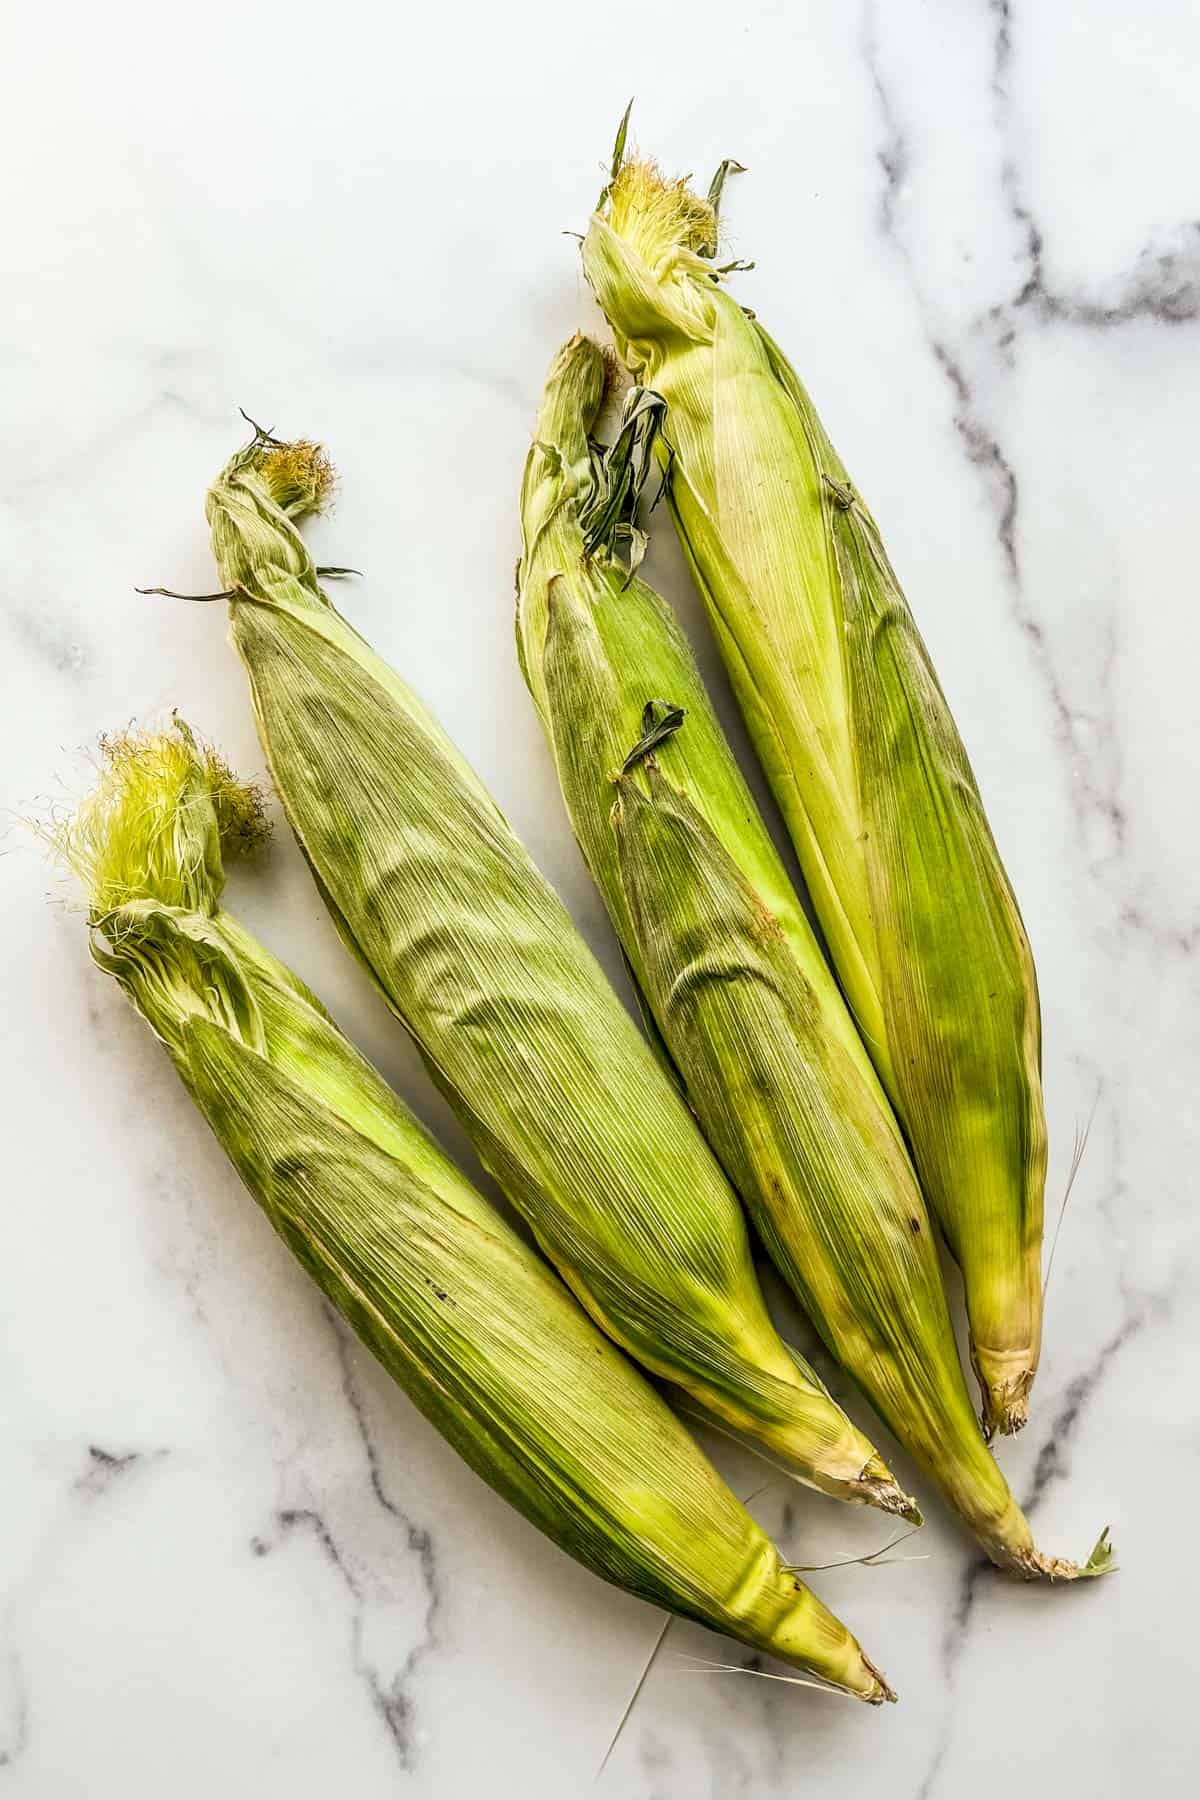 Four ears of fresh sweet corn.